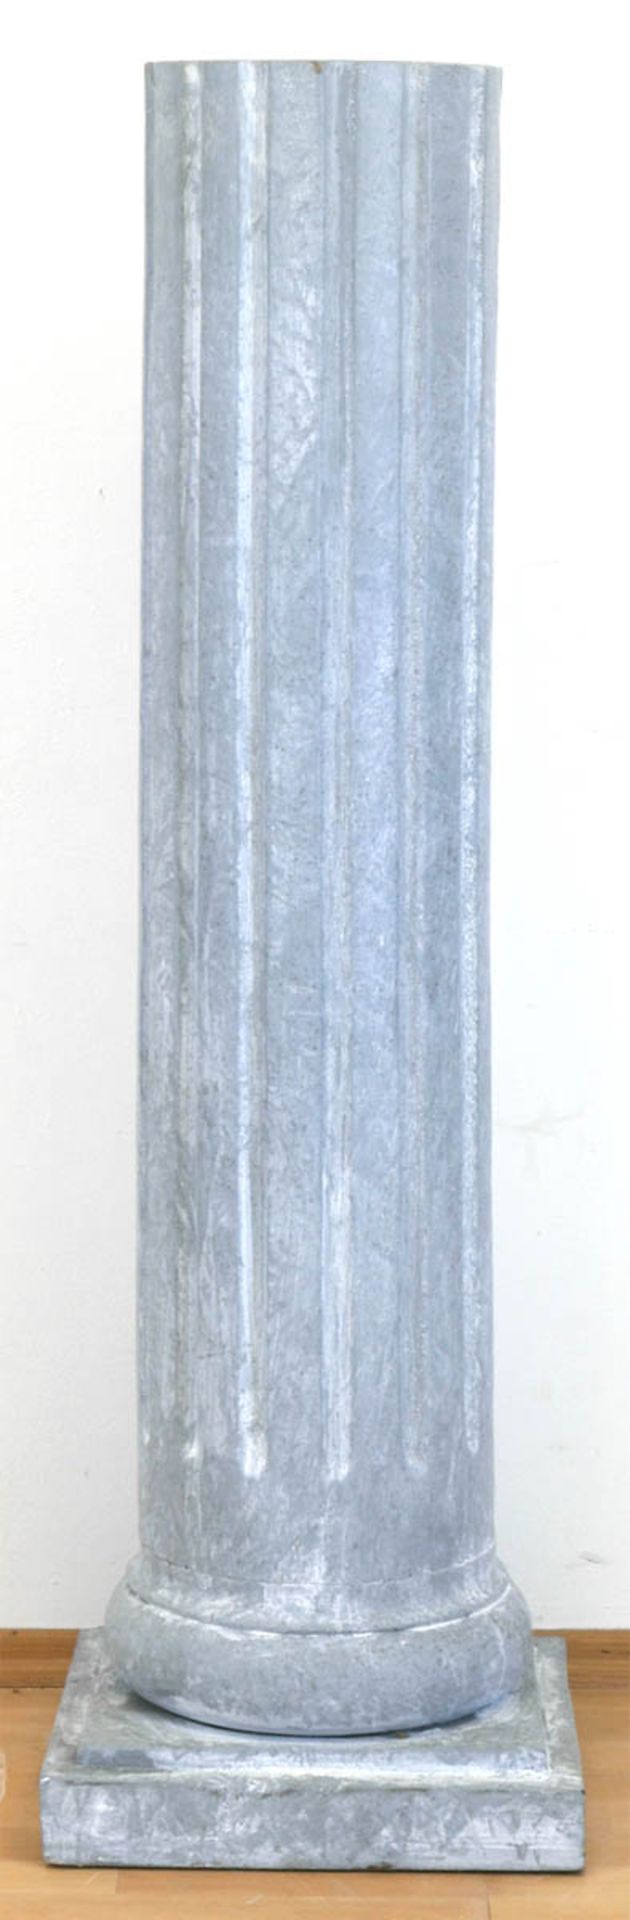 Säule, Holz, grau gefaßt, über 4-eckigem Stand kannelierte Säule, 120x35x36 cm